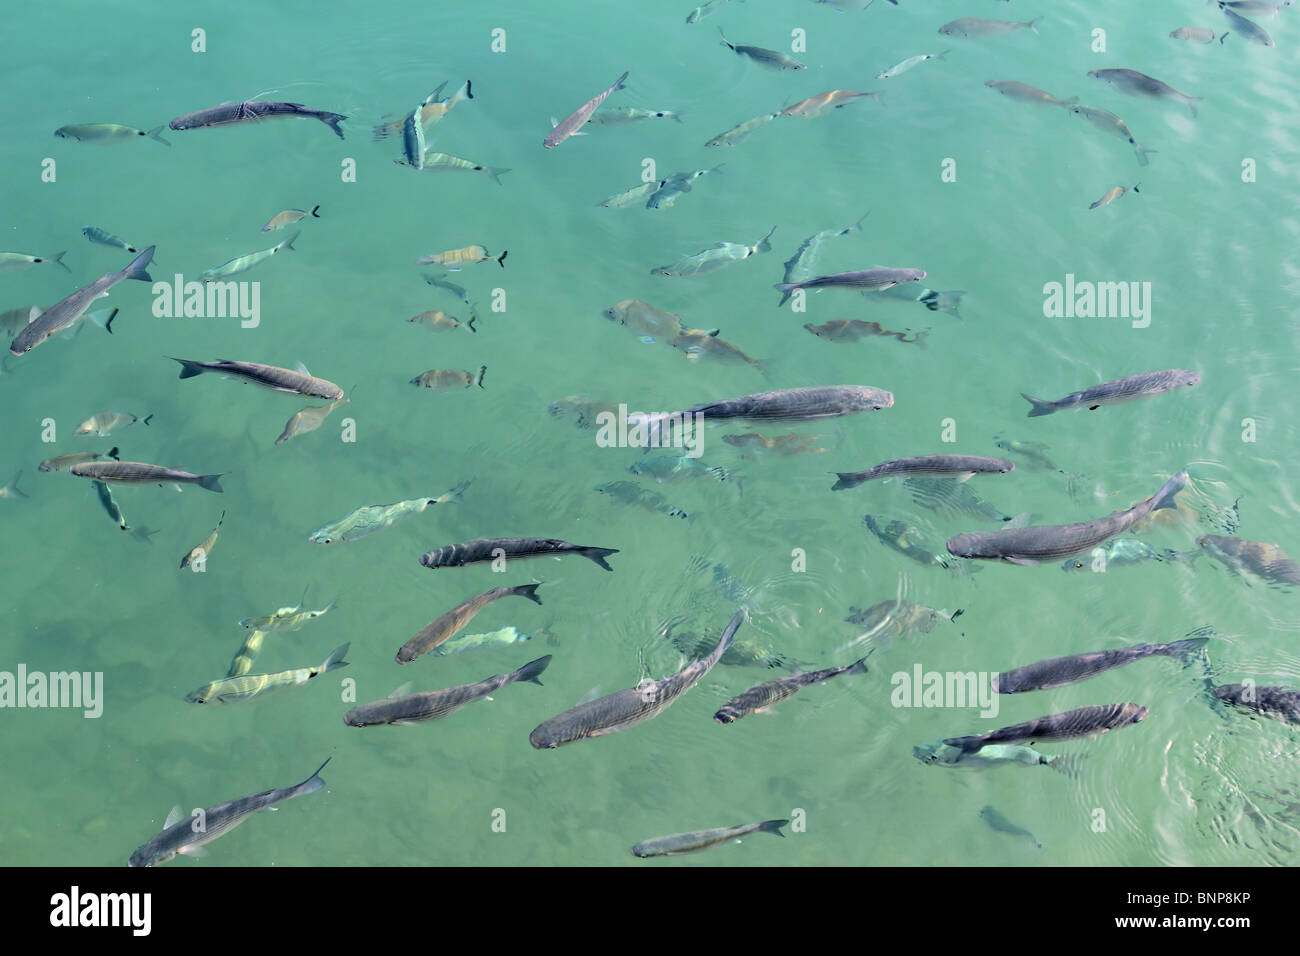 fishes mullet school in mediterranean port saltwater Stock Photo - Alamy